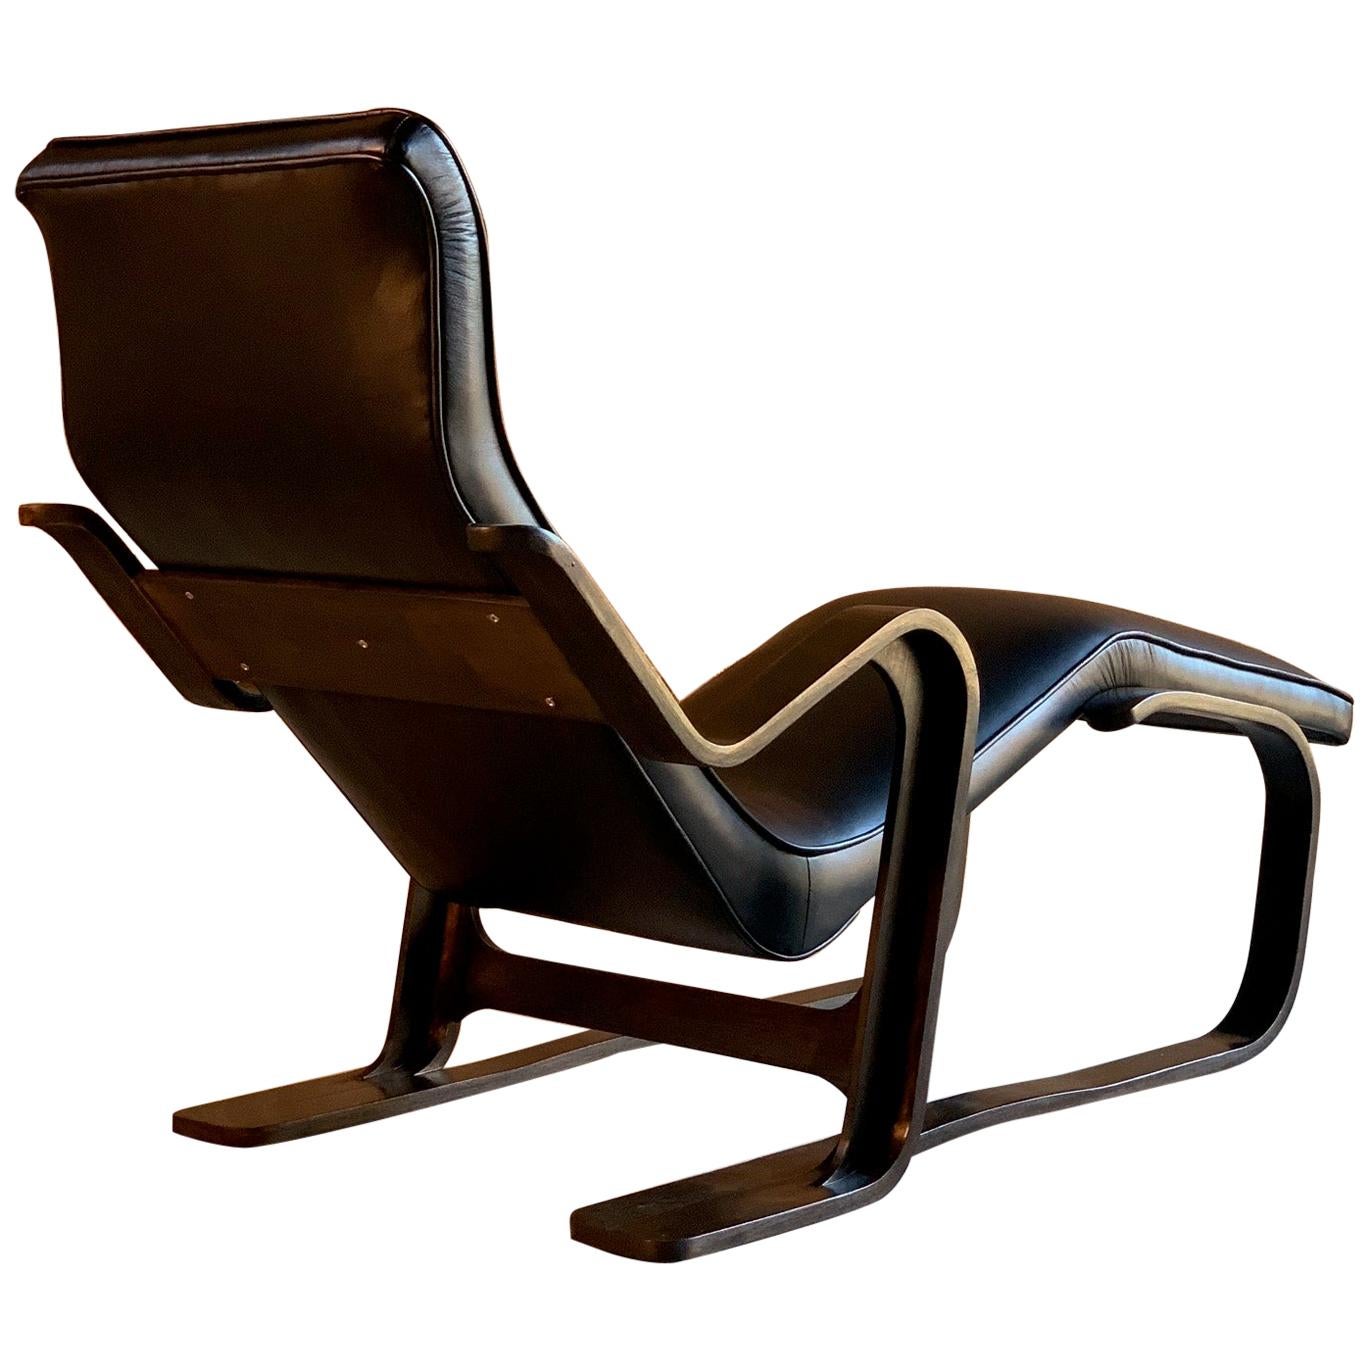 Marcel Breuer Long Chair Chaise Lounge by Isokon, circa 1970 Bauhaus Midcentury